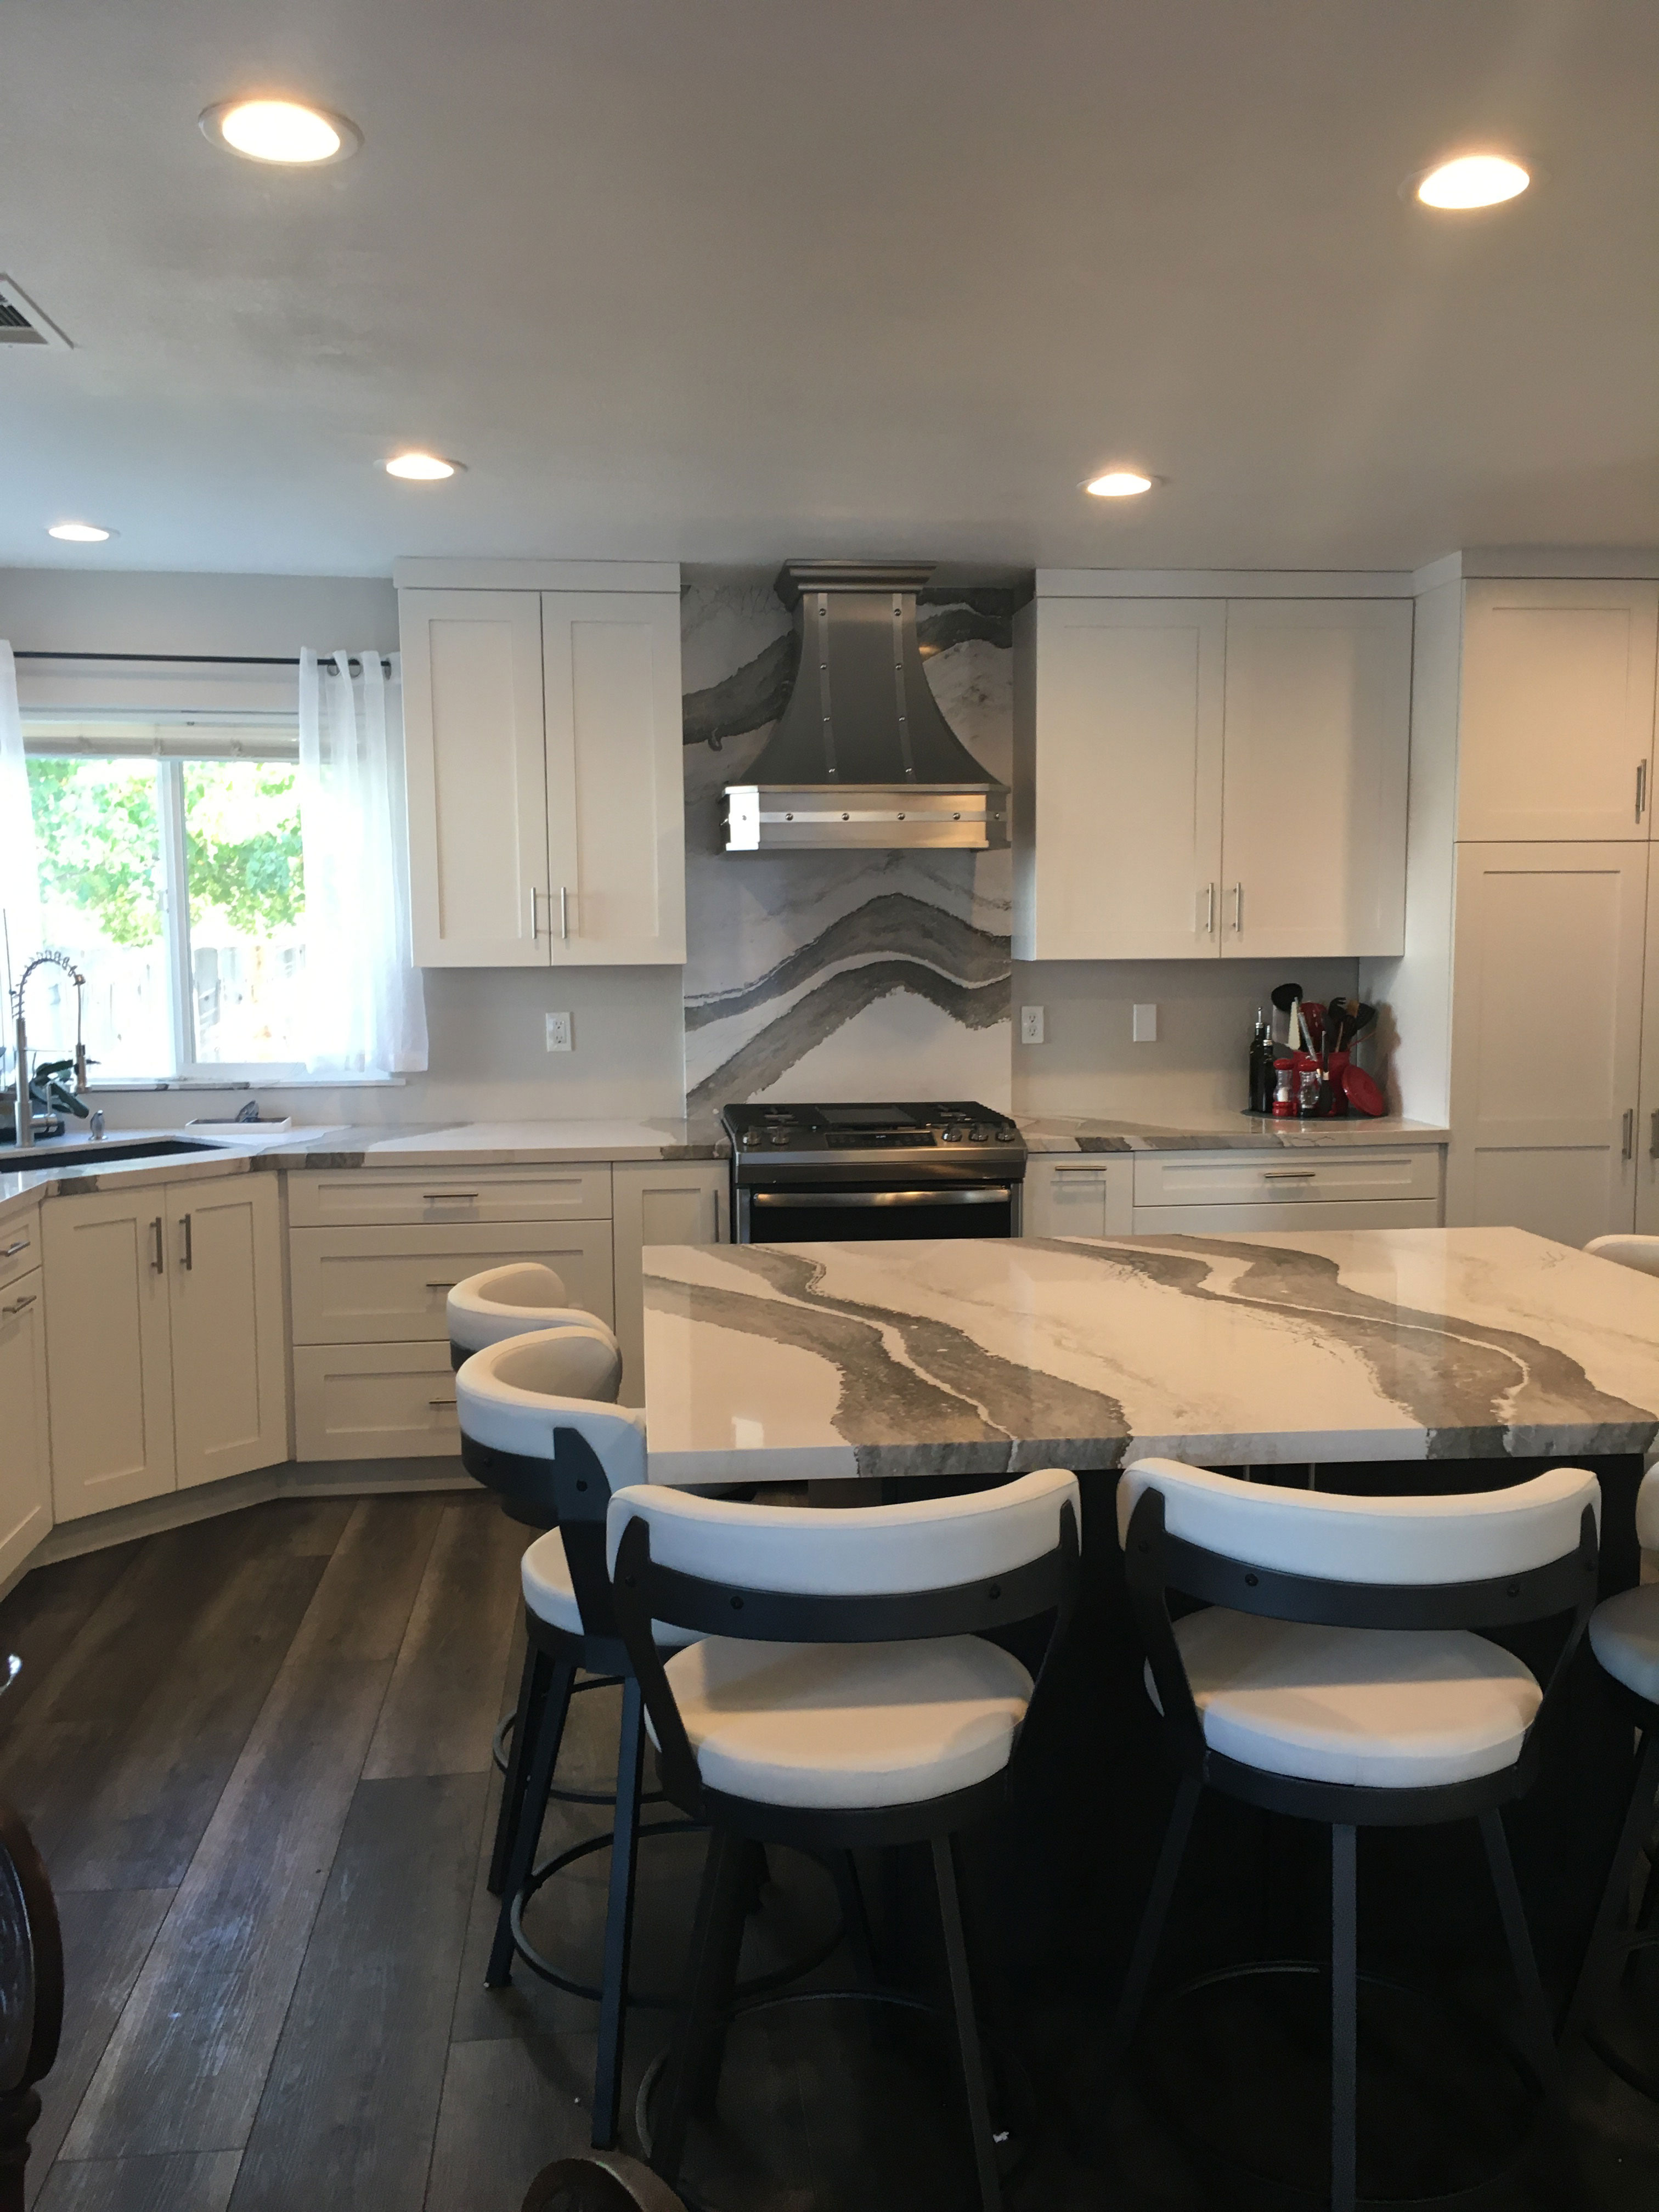 Beautiful kitchen planning with range hood, white kitchen cabinets, marble kitchen countertop and backsplash